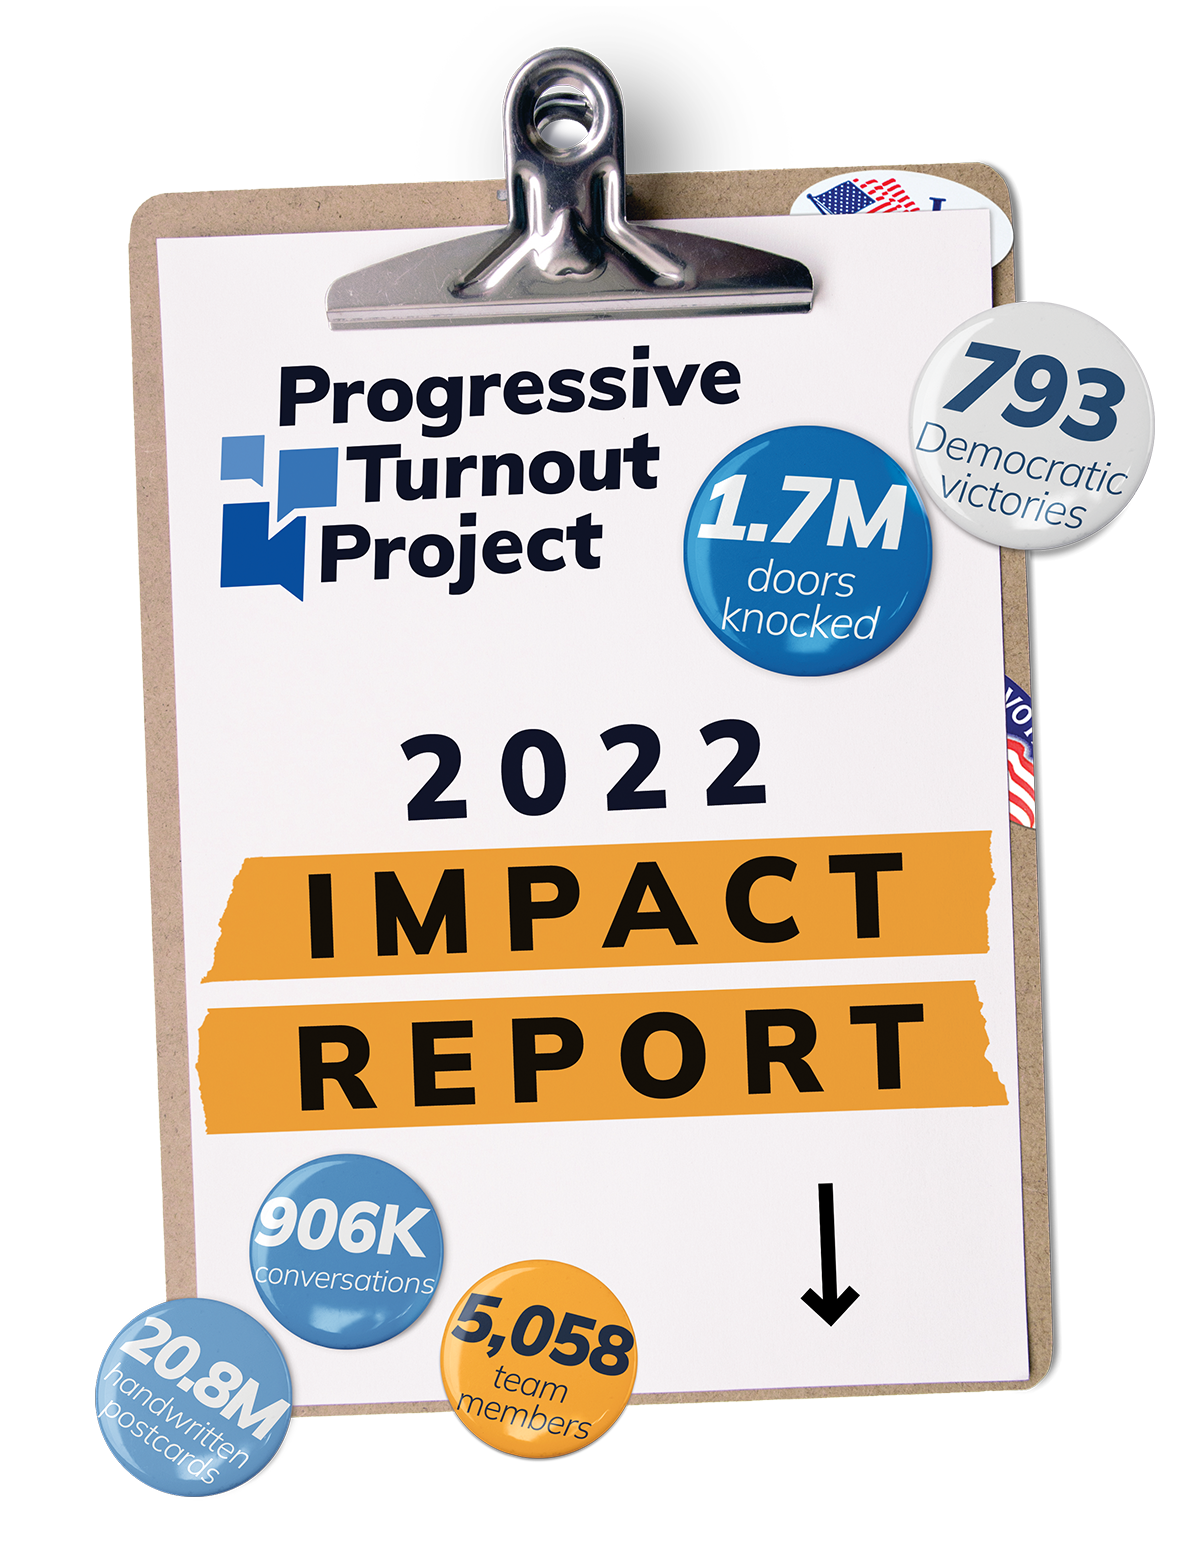 Progressive Turnout Project's 2022 Impact Report: 793 Democratic Victories. 1.7 million doors knocked. 906,000 conversations. 20.8 million handwritten postcards. 5,058 team members.